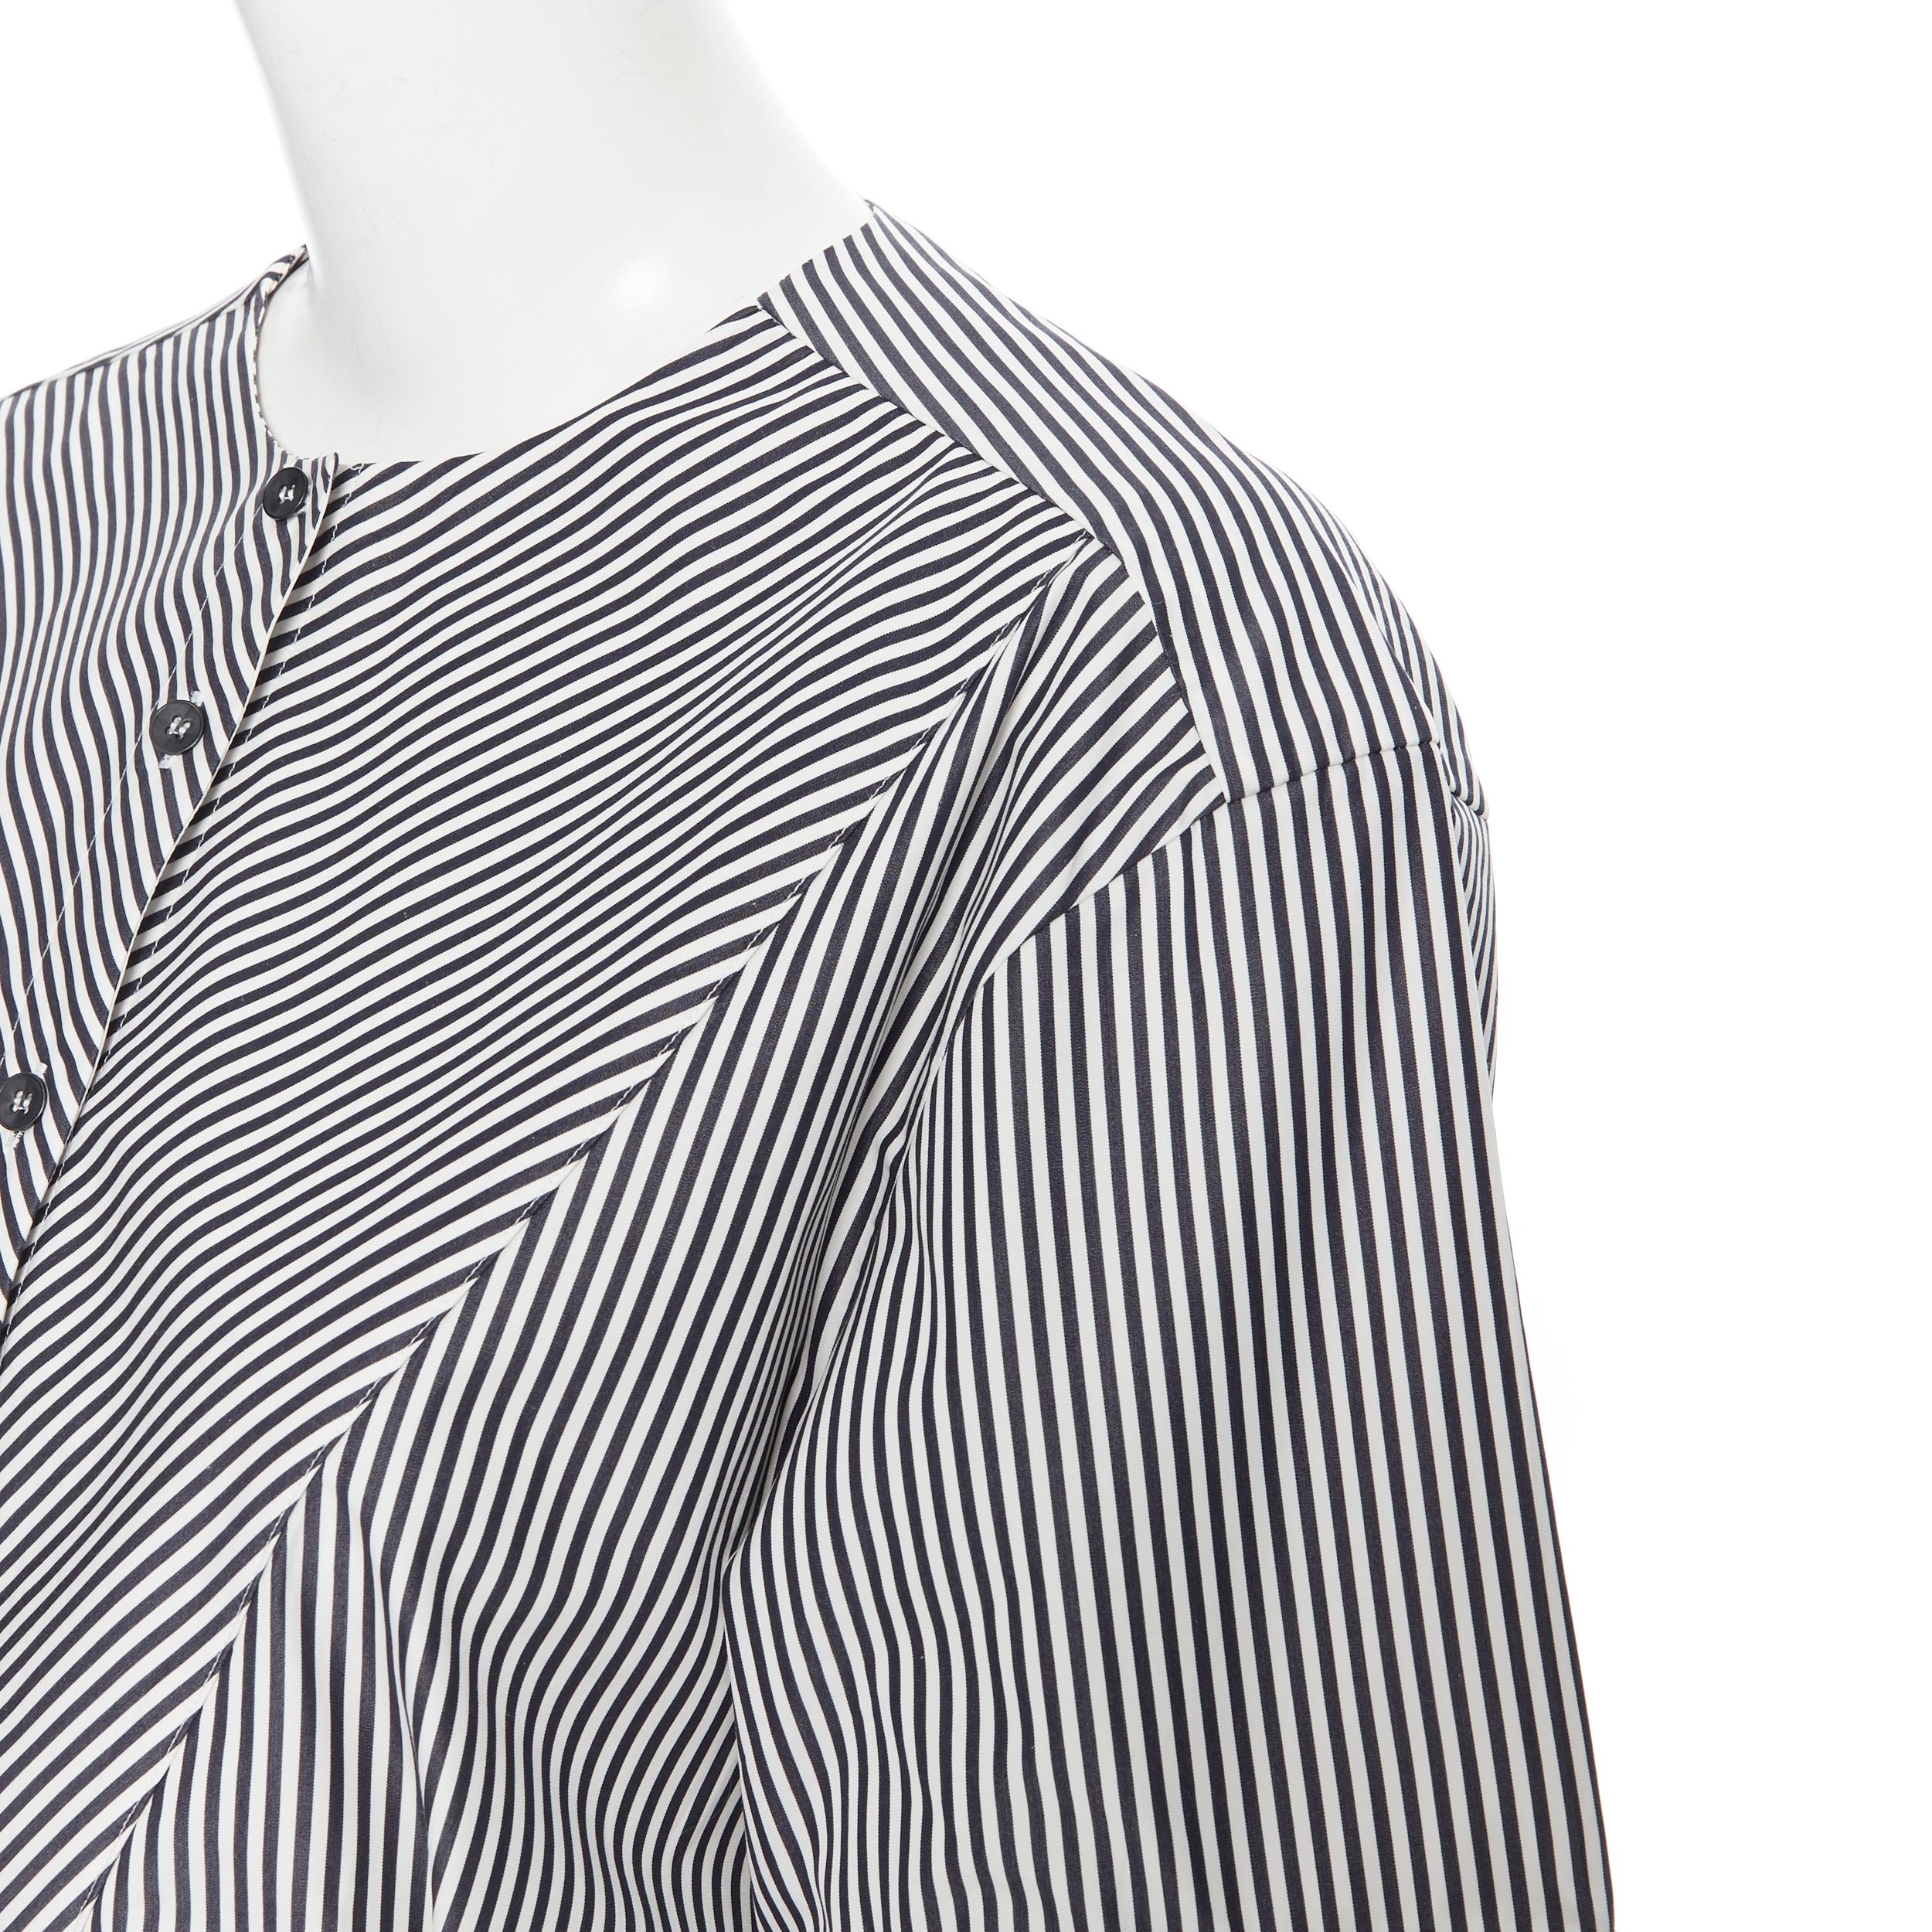 PALMER HARDING 100% cotton navy white contrast stripe cinched waist shirt UK6 XS 2